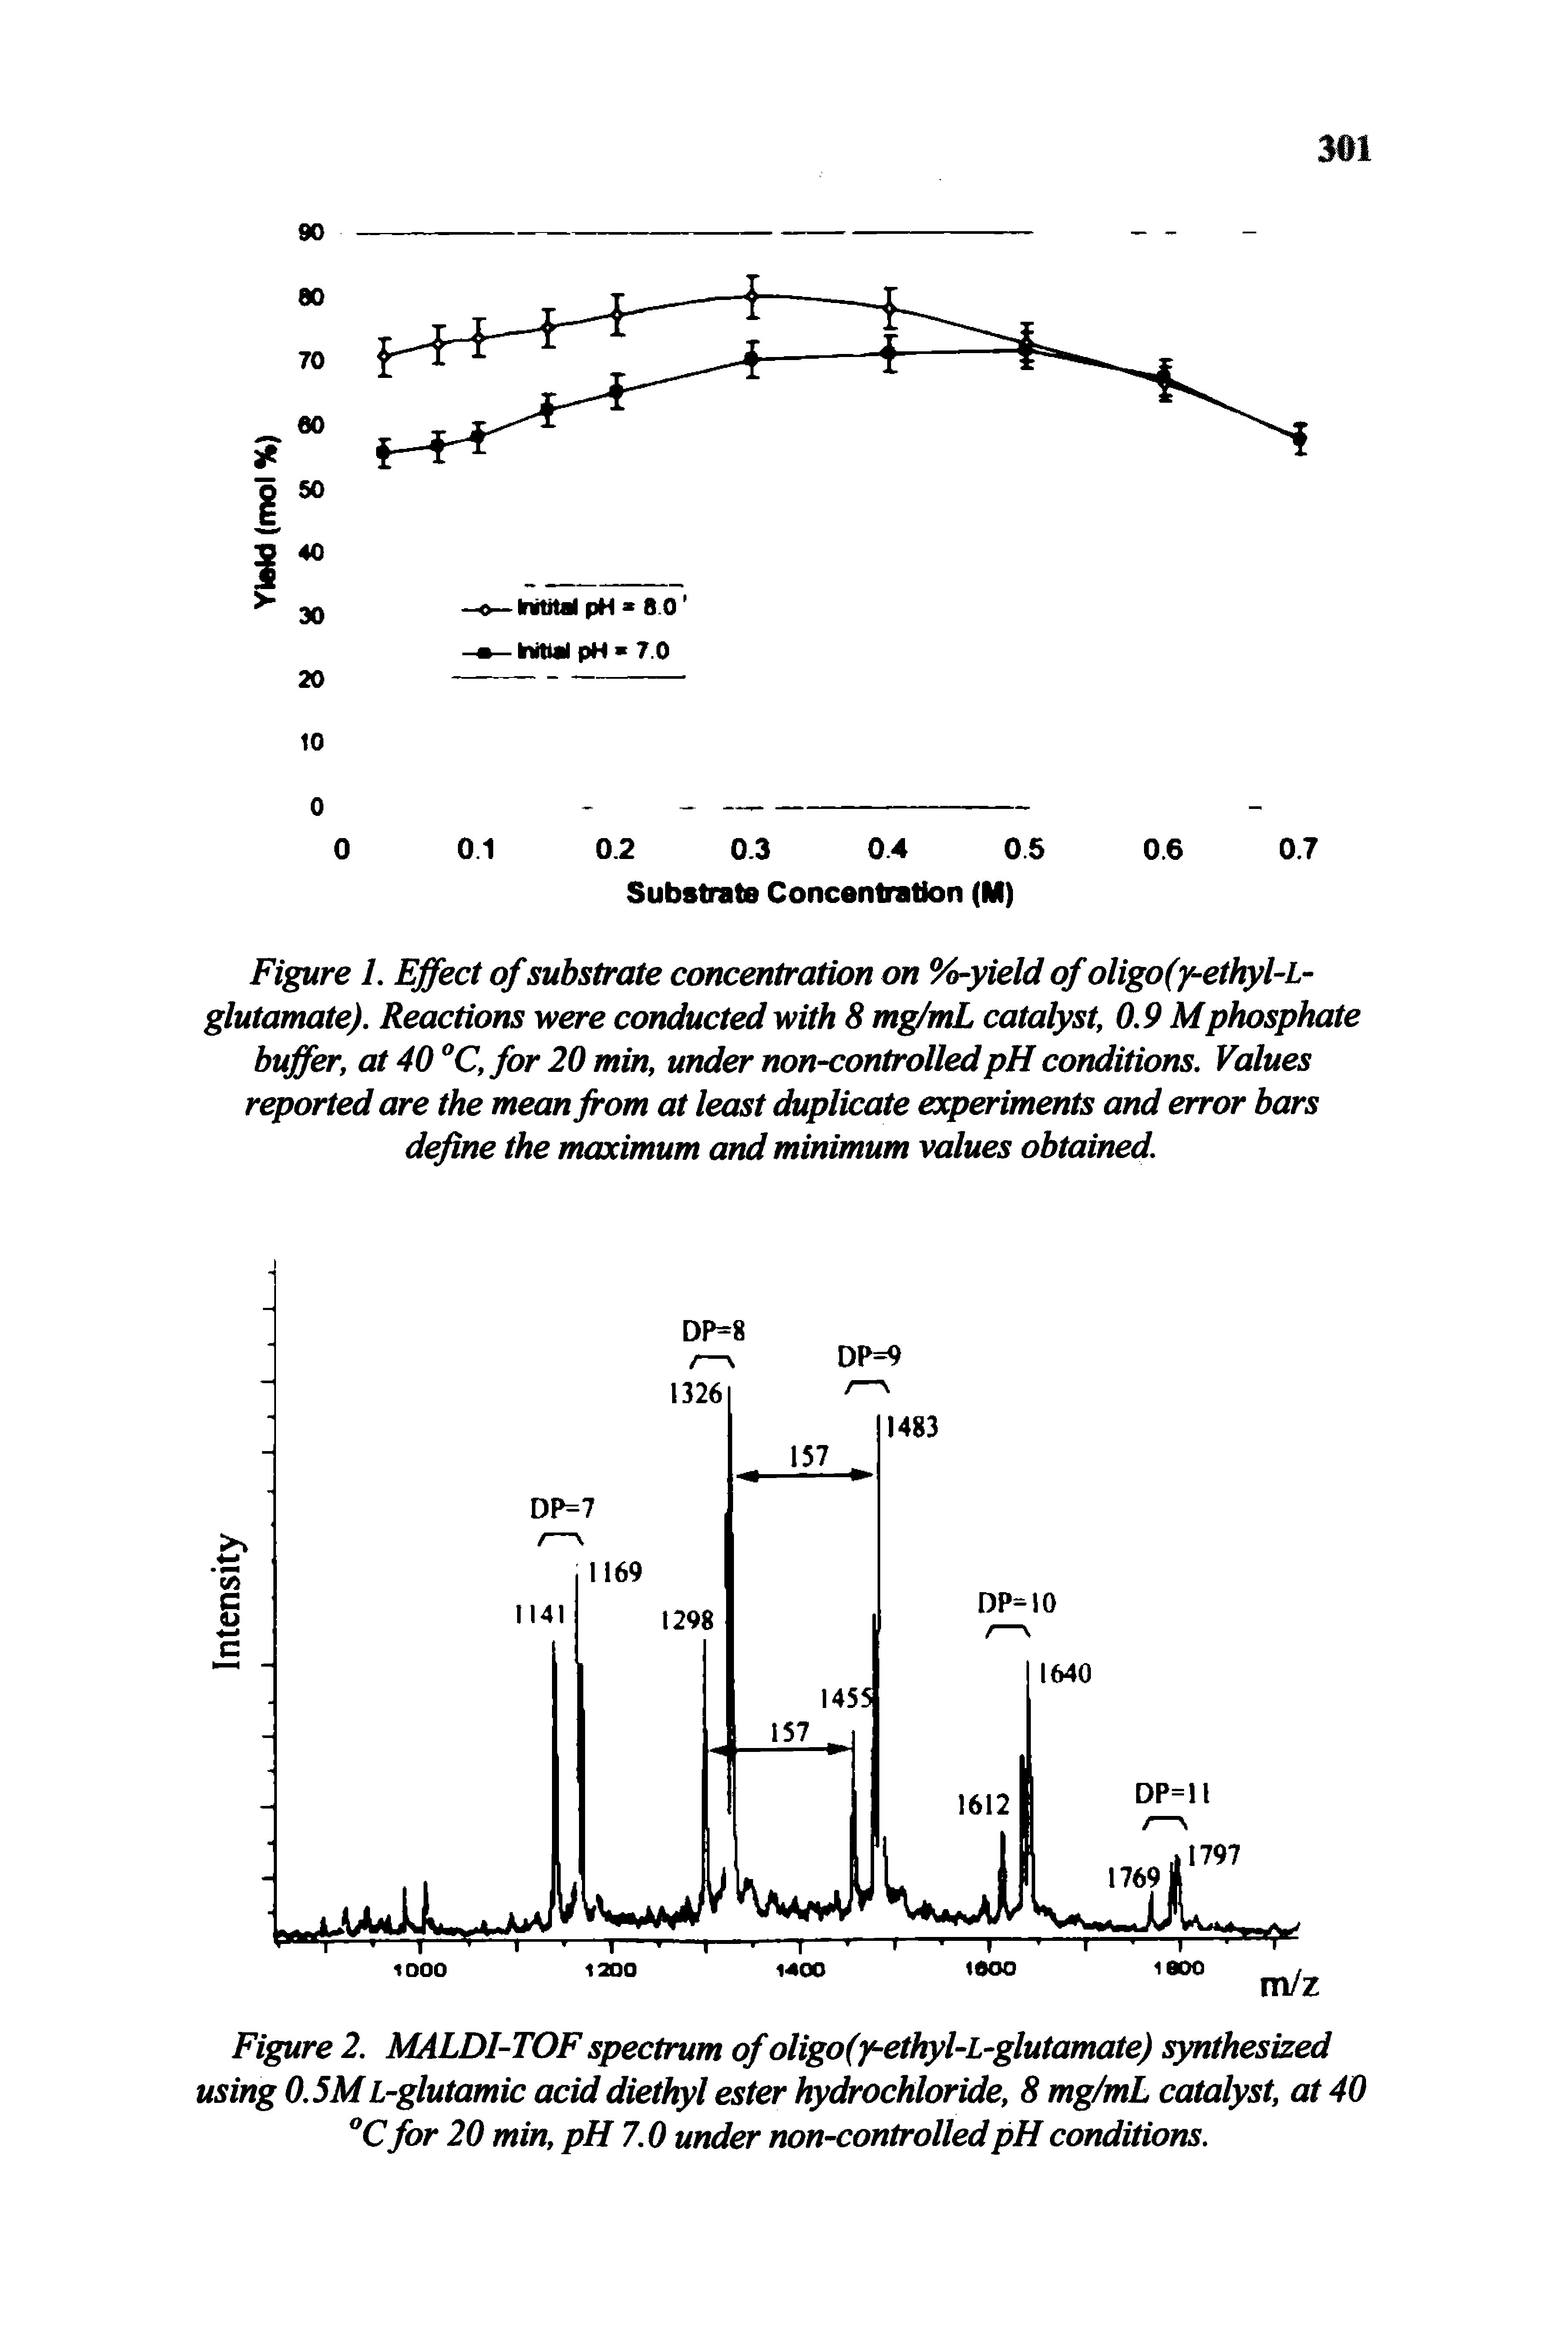 Figure 2. MALDI-TOF spectrum of oligo(y-ethyl L-glutamate) synthesized using 0.5ML-glutamic acid diethyl ester hydrochloride, 8 mg/mL catalyst, at 40 for 20 min, pH 7.0 under non-controlledpH conditions.